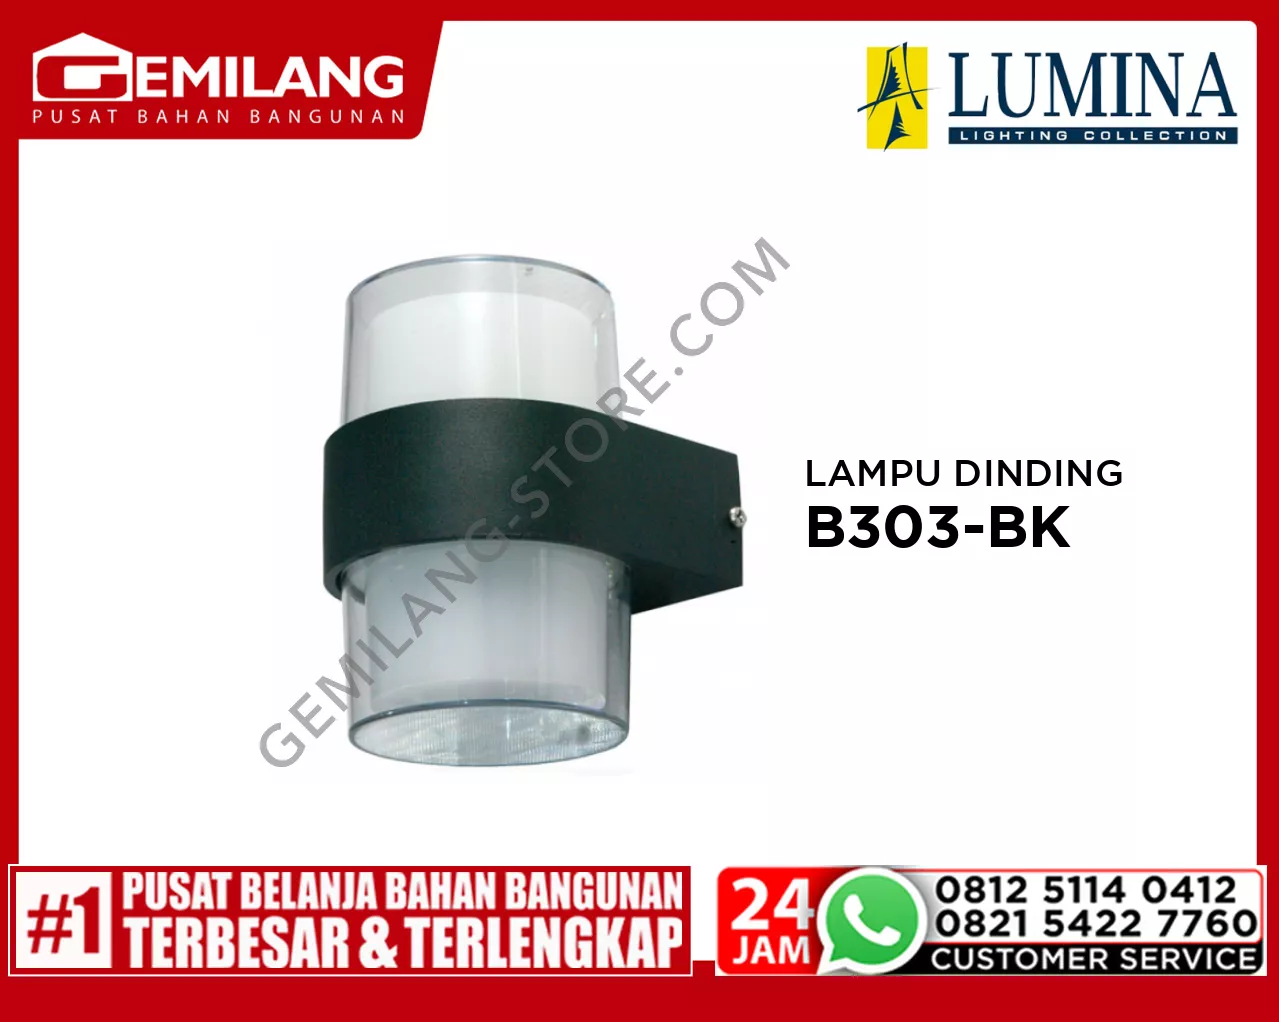 LAMPU DINDING B303-BK 3 COLOURS